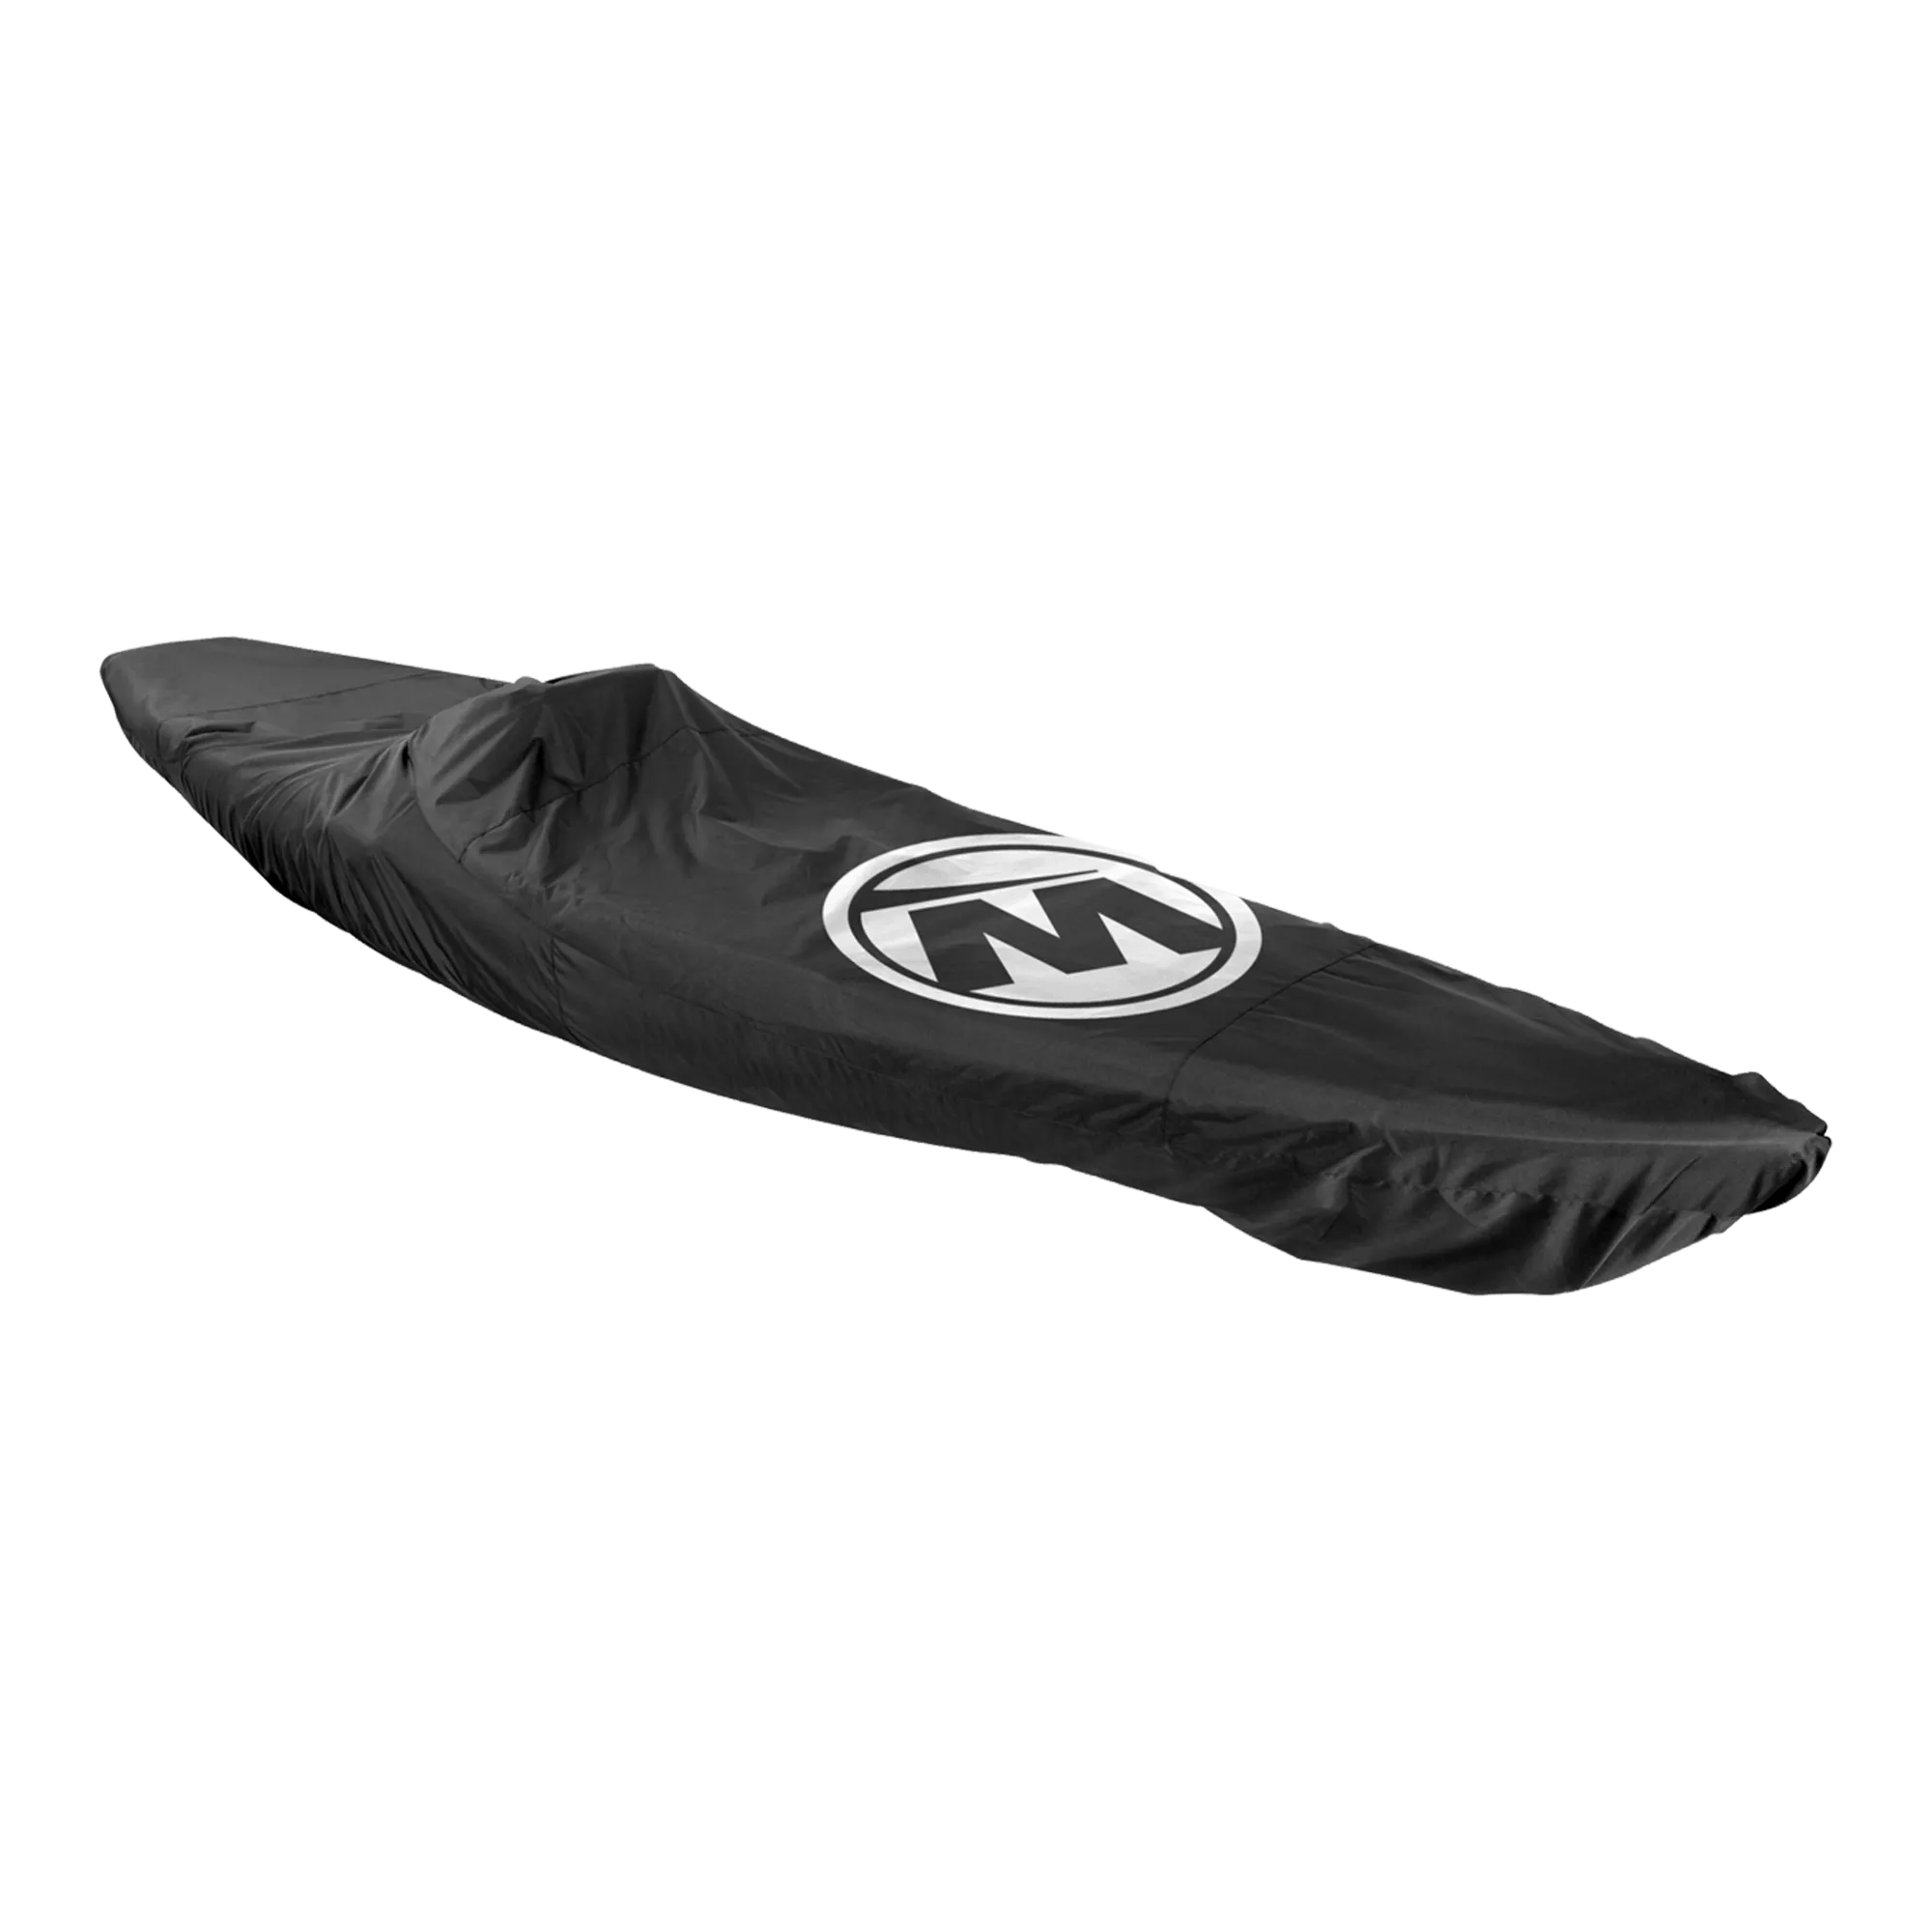 WILDERNESS SYSTEMS - Housse résistante pour les kayaks ouverts – XL - Black - 8070234 - ISO 